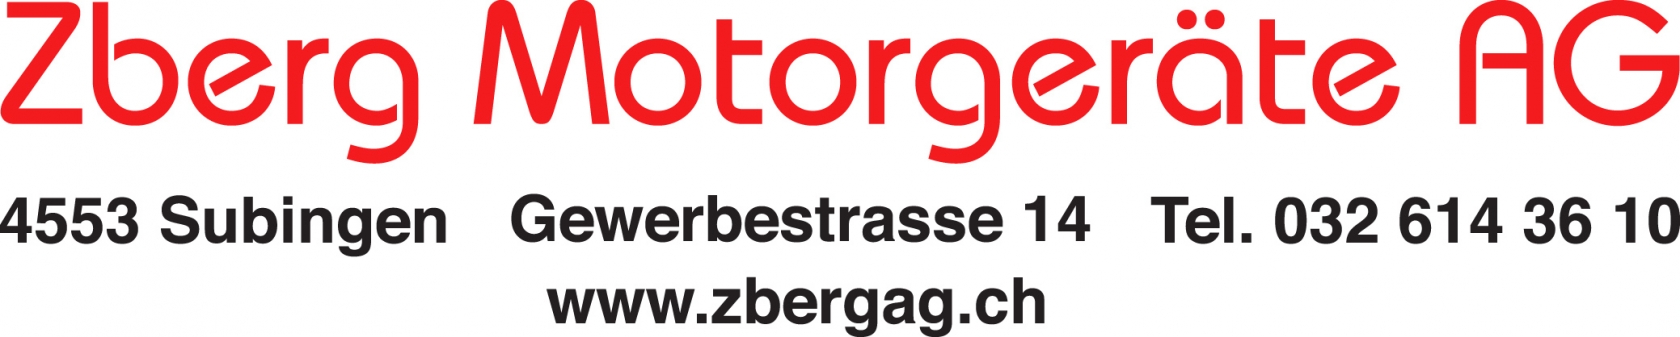 Logo_Zberg_Motorg